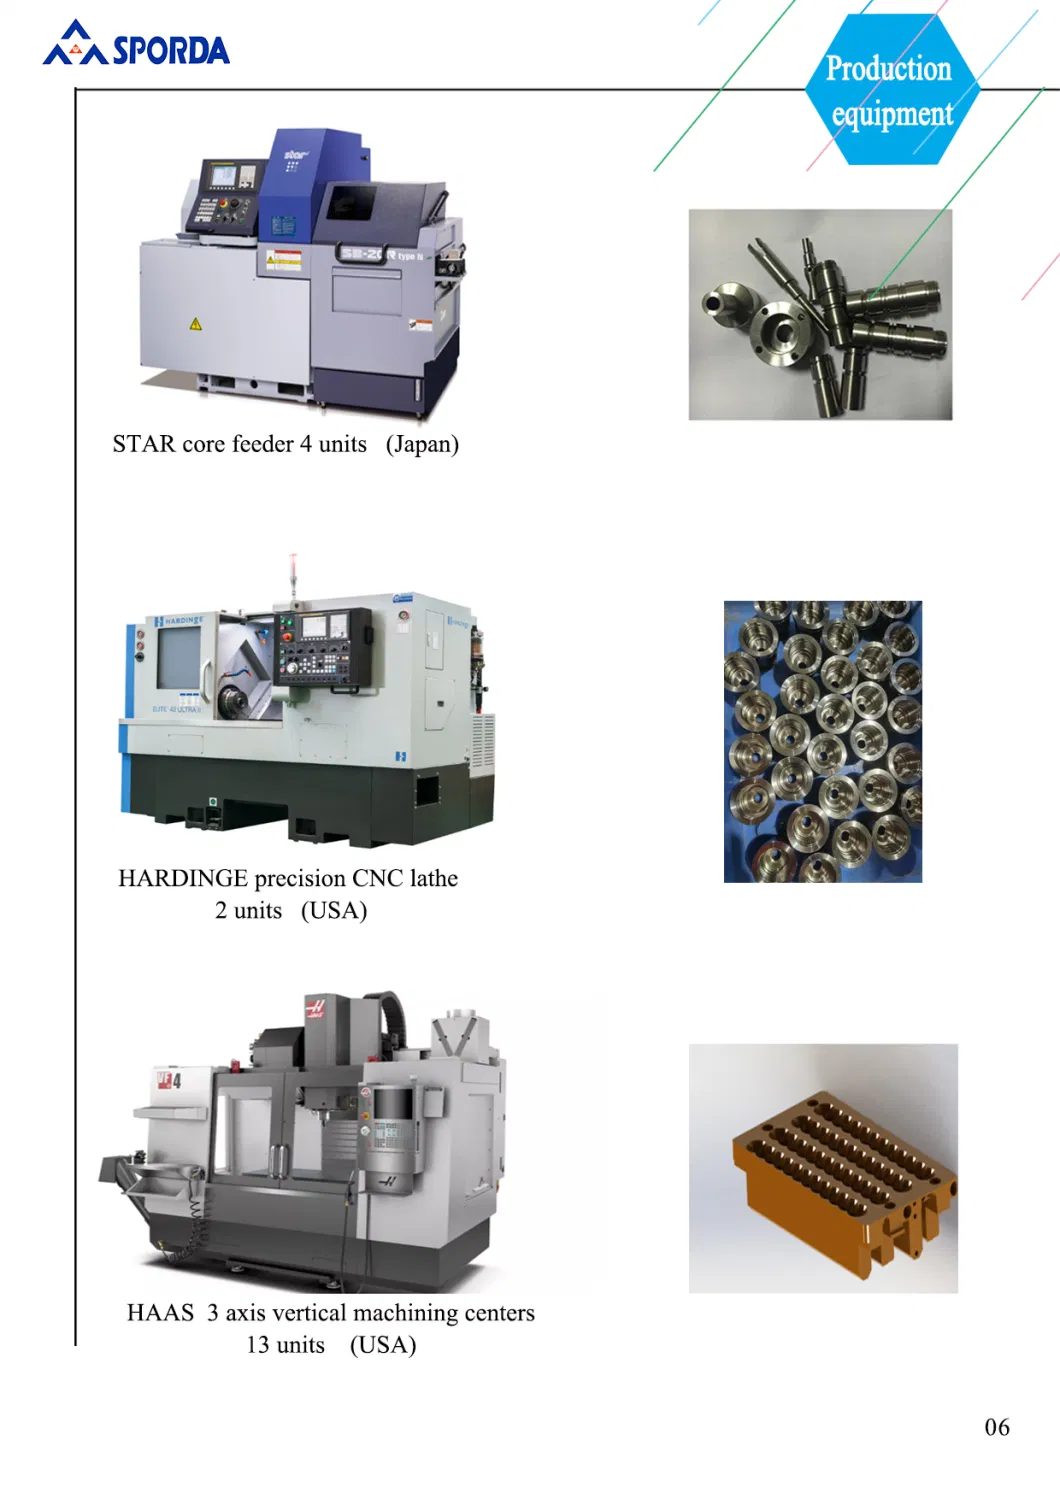 CNC Prototyping Design Pioneers Precision Aluminum Component Fabrication